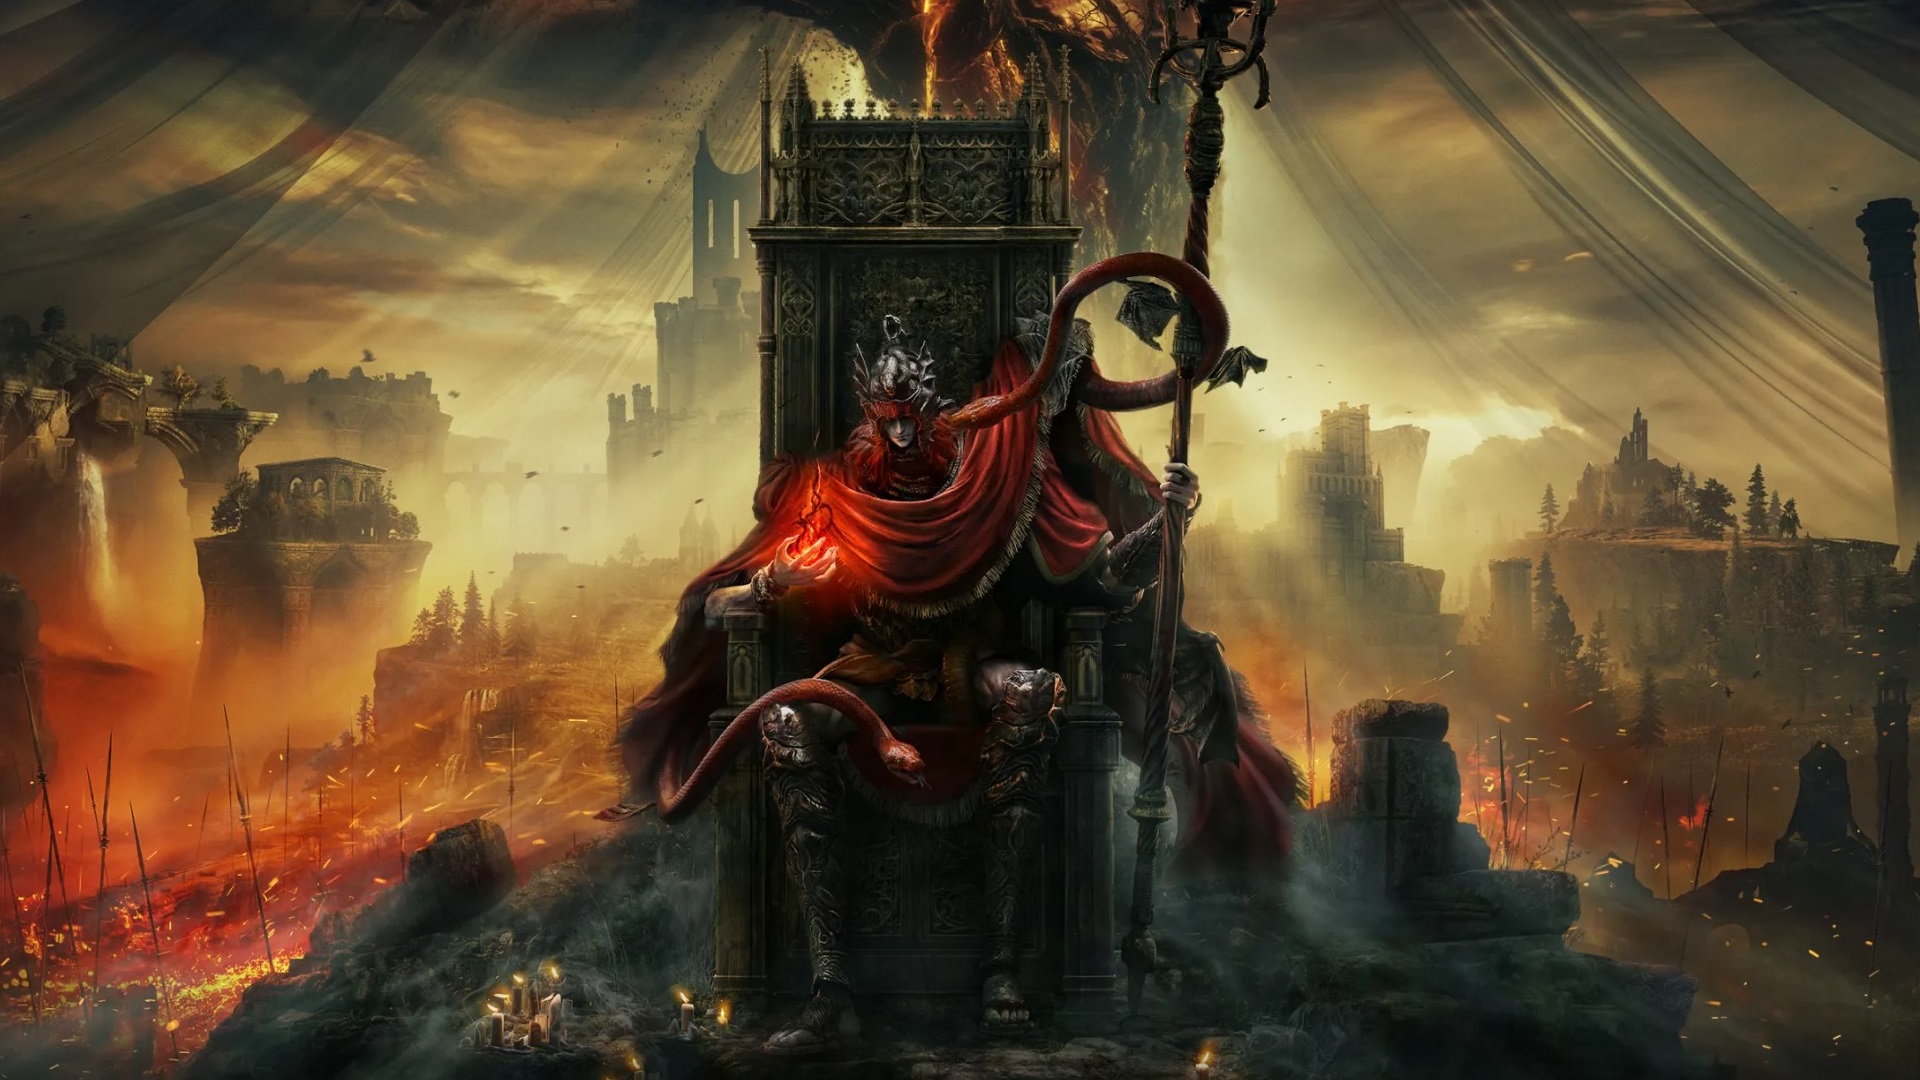 Elden ring Key art of Messmer the Impaler sitting on a throne